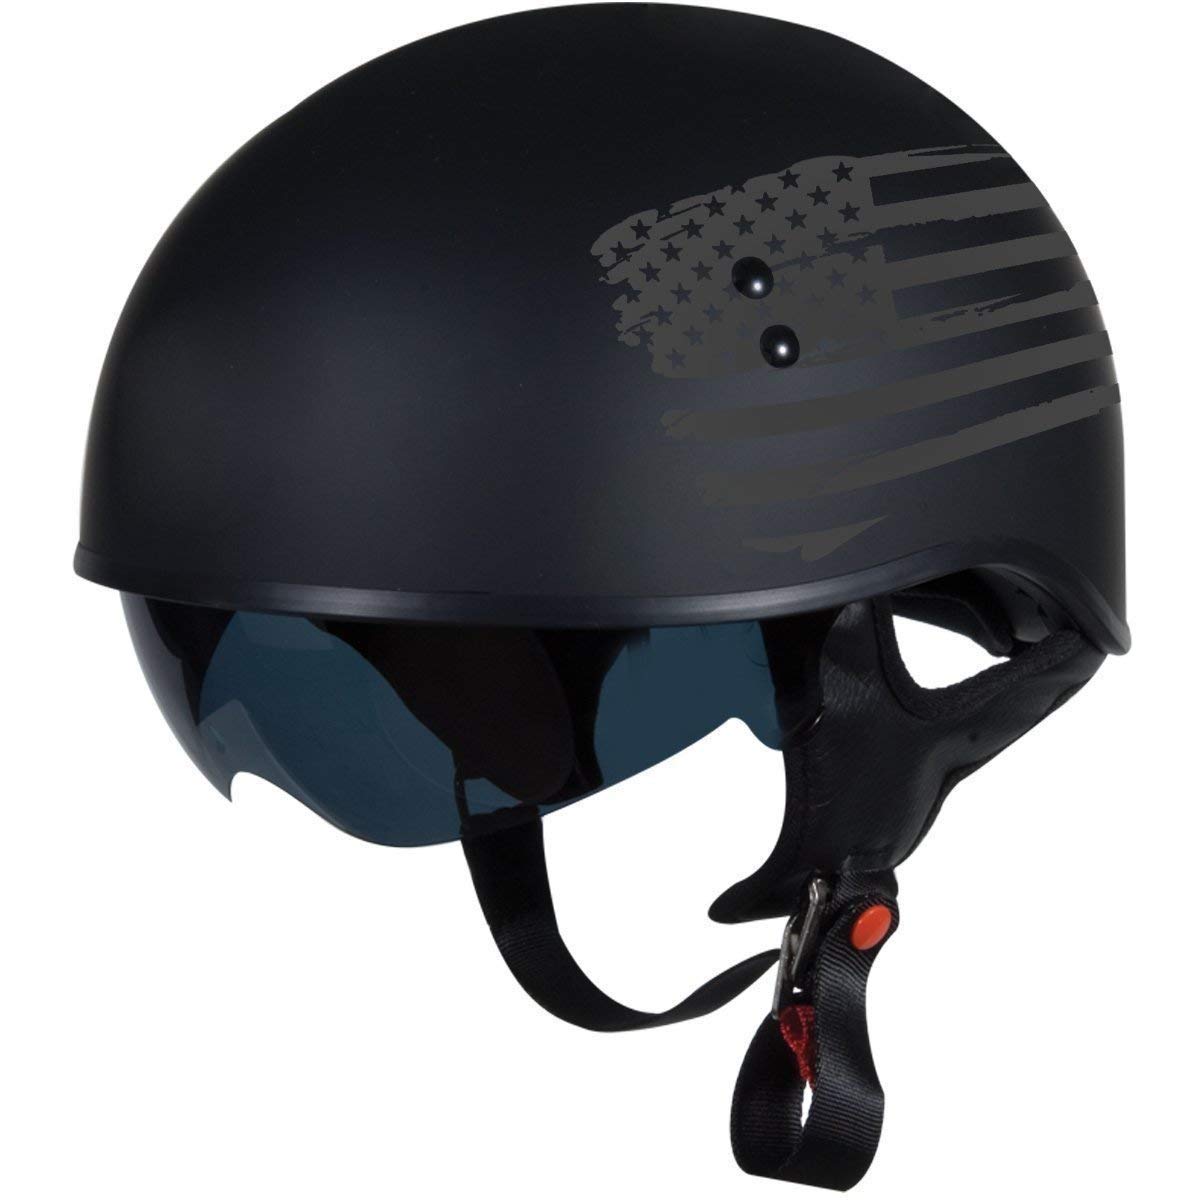 G-AVERIL Carbon fibre Half Motorcycle Helmet Cruiser Micrometric Buckle DOT Certified Bright Black 